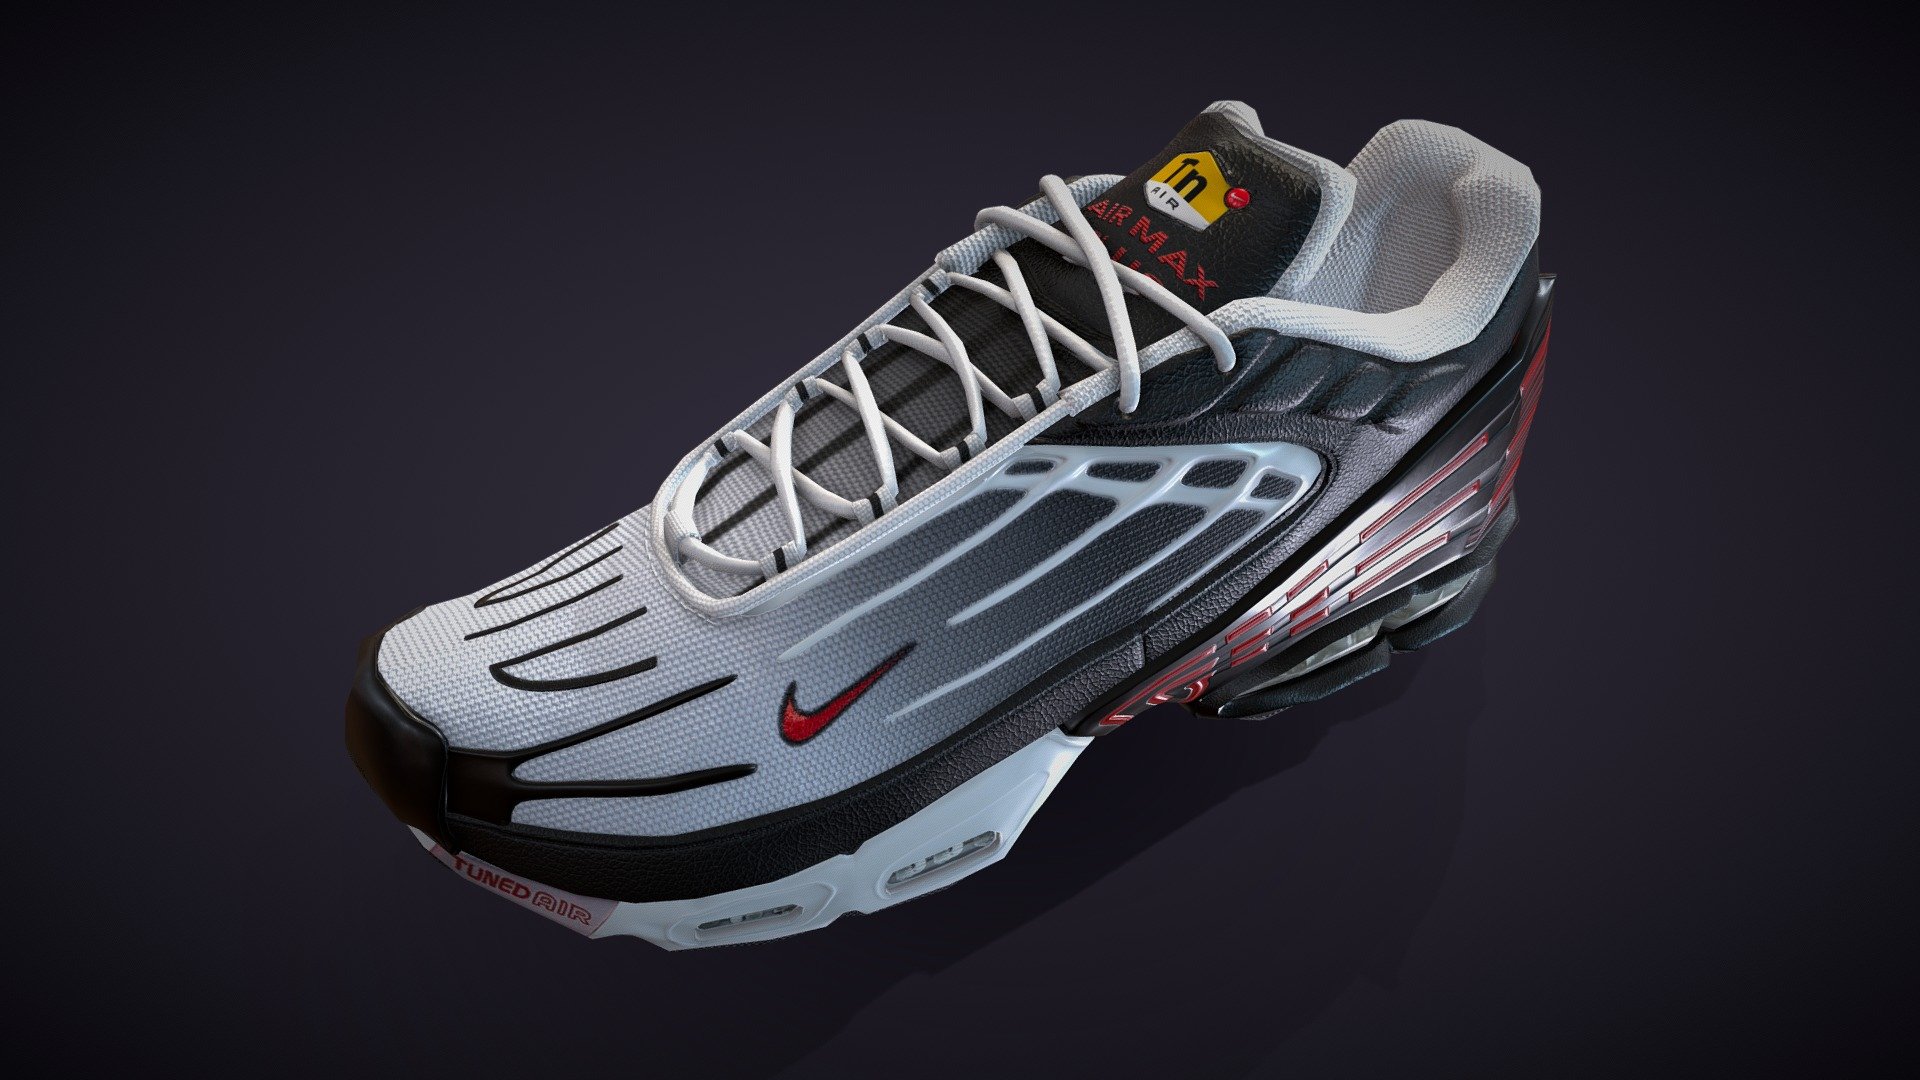 Lowpoly model of Nike air tuned3

Project details: https://www.artstation.com/artwork/k40lex - Nike air Tuned3 - 3D model by ShaheenCG 3d model